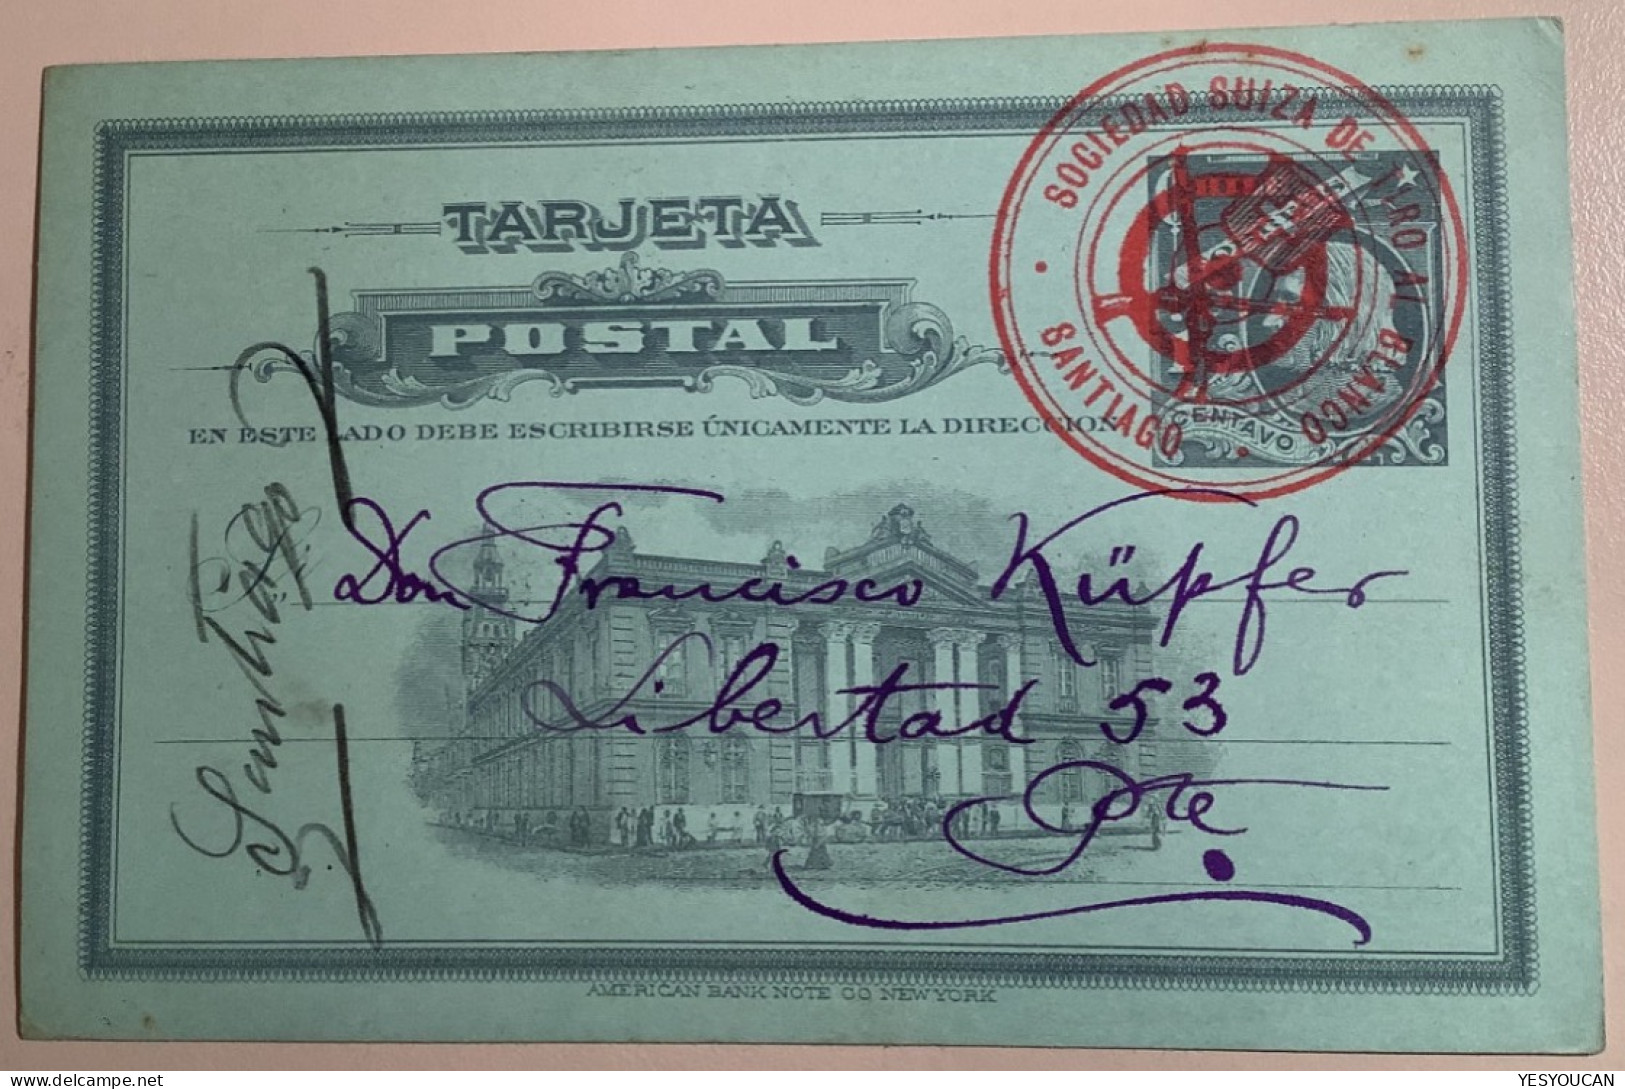 RRR ! PMK 1907„SOCIEDAD SUIZA TIRO AL BLANCO SANTIAGO“postal Stationery Card (Chile Schweiz Schützenfest Shooting Tir - Chili